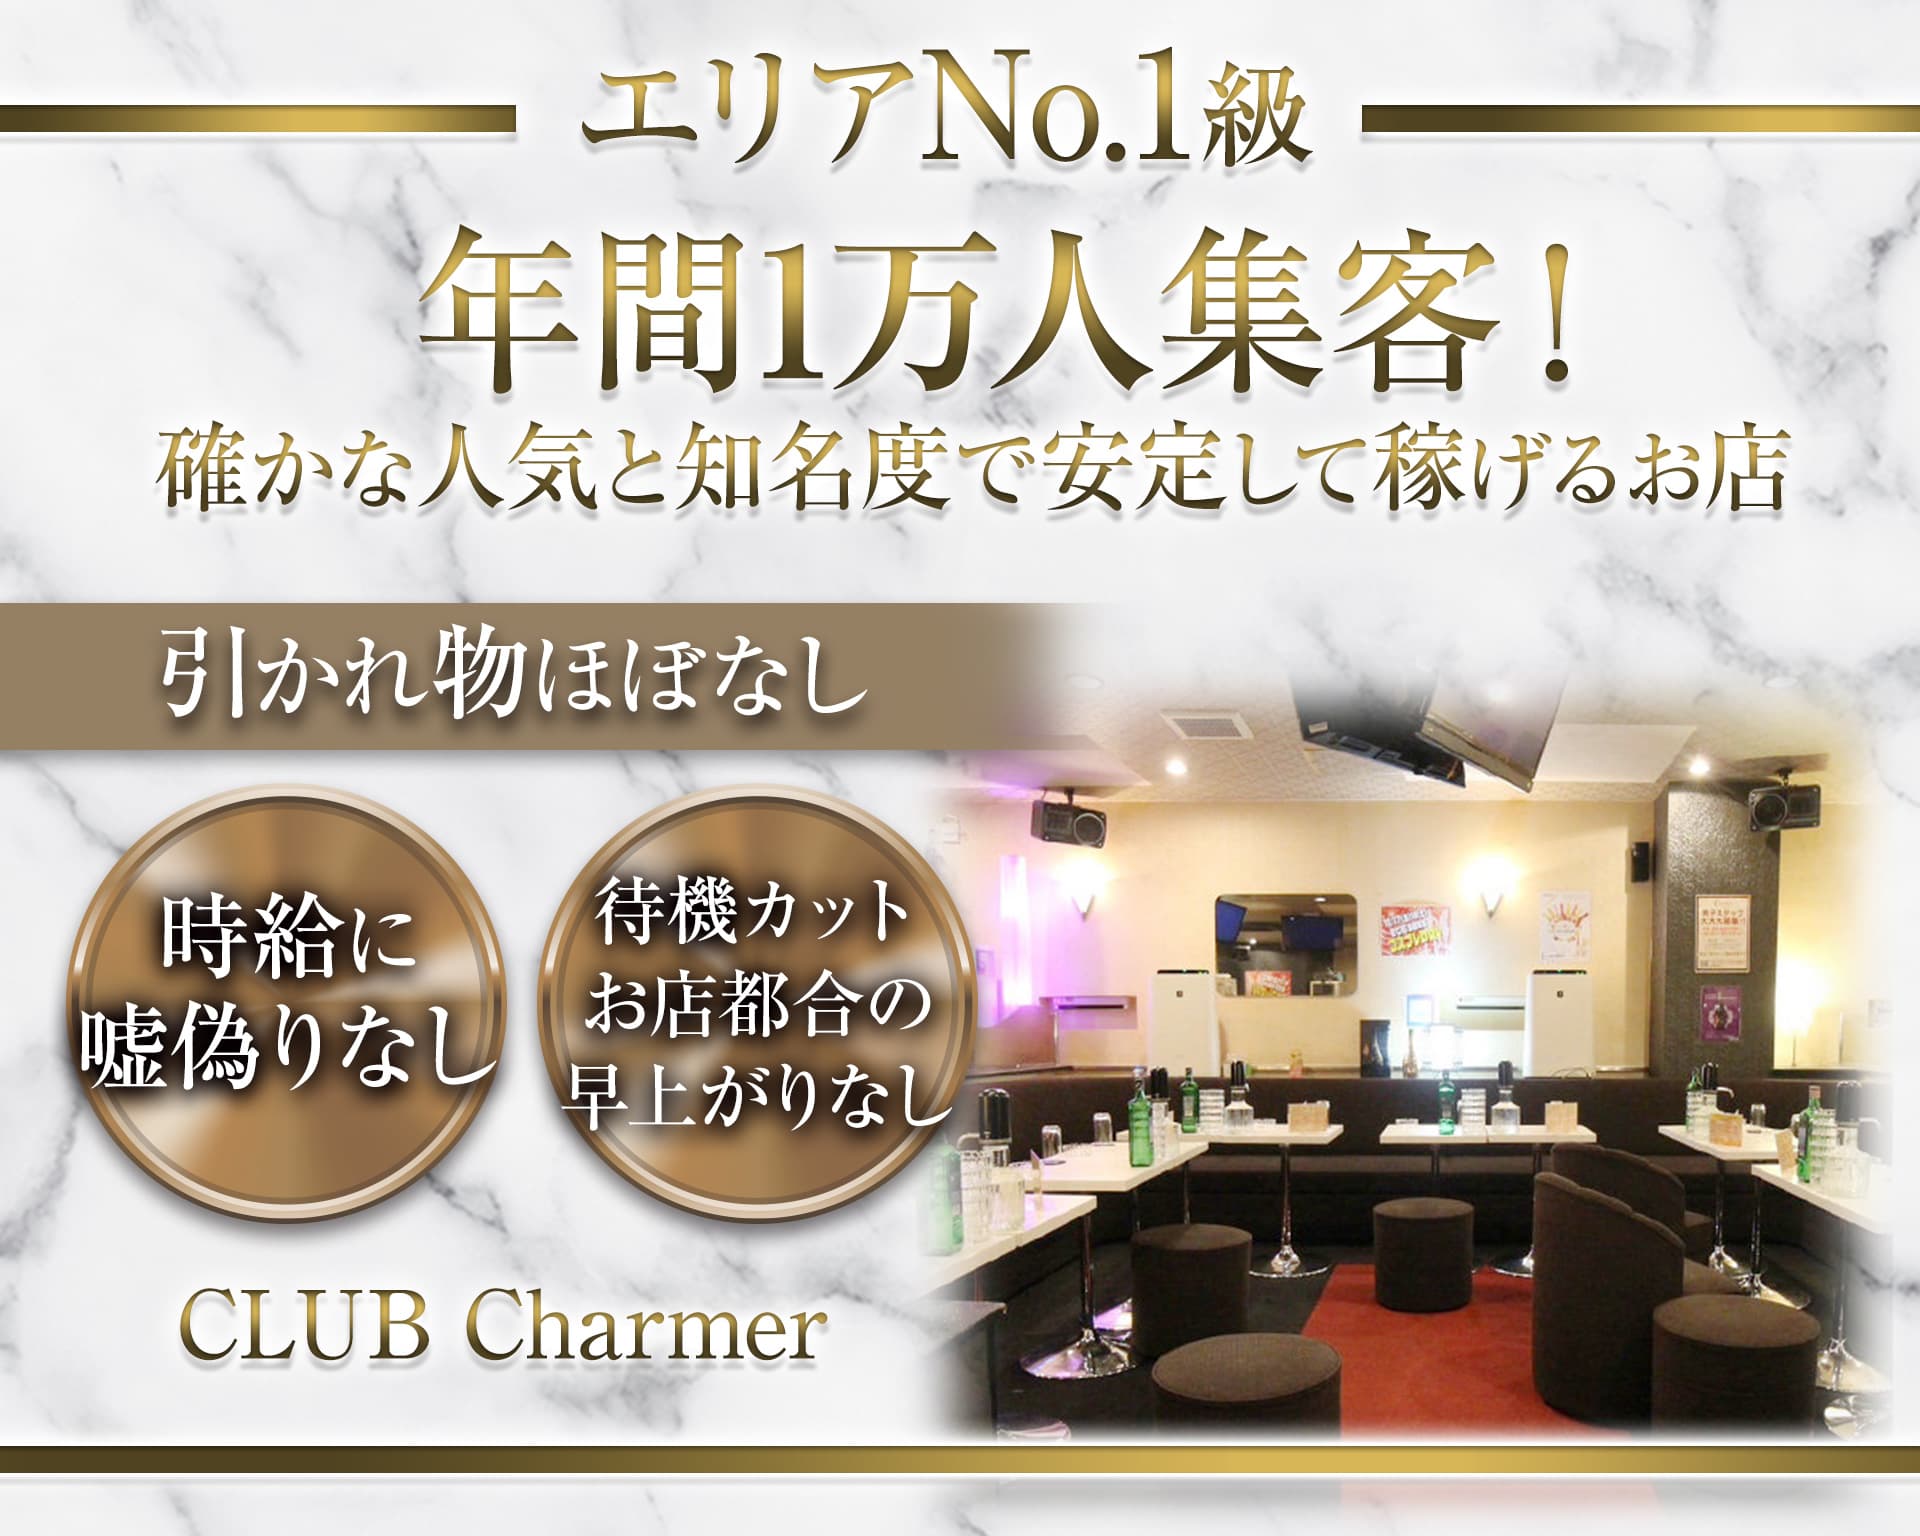 CLUB Charmer（シャルメ）【公式体入・求人情報】 綱島キャバクラ TOP画像